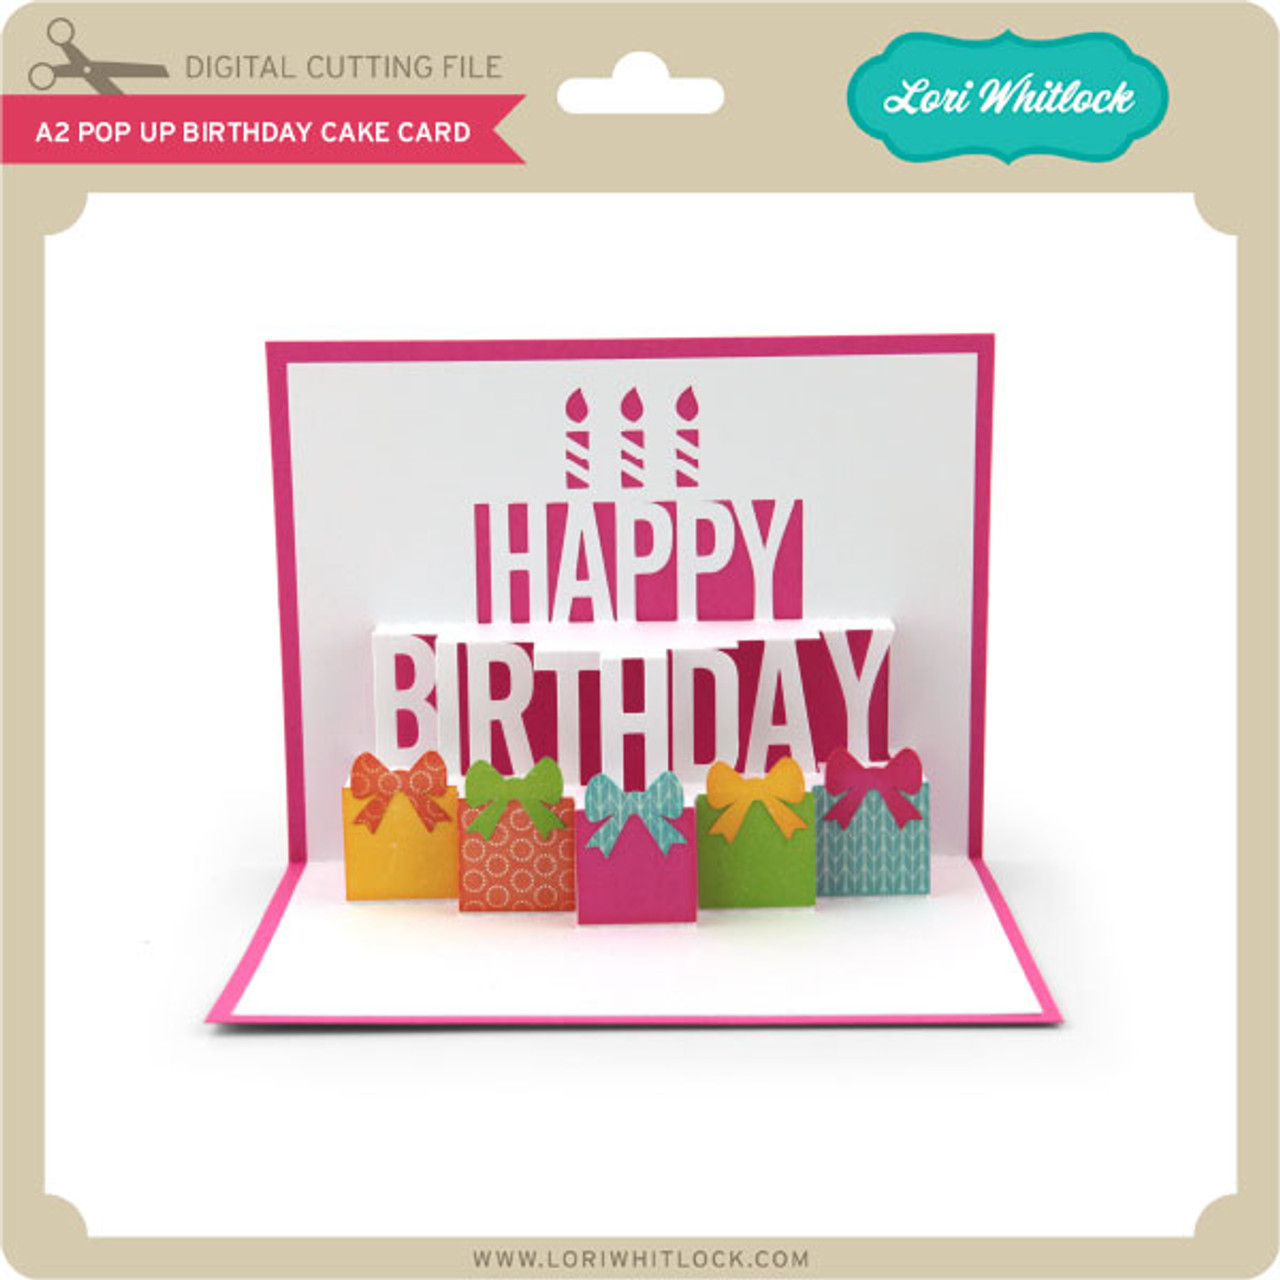 Make A Wish Birthday Card, happy birthday, cake lover, simple, birthday cake  | thortful